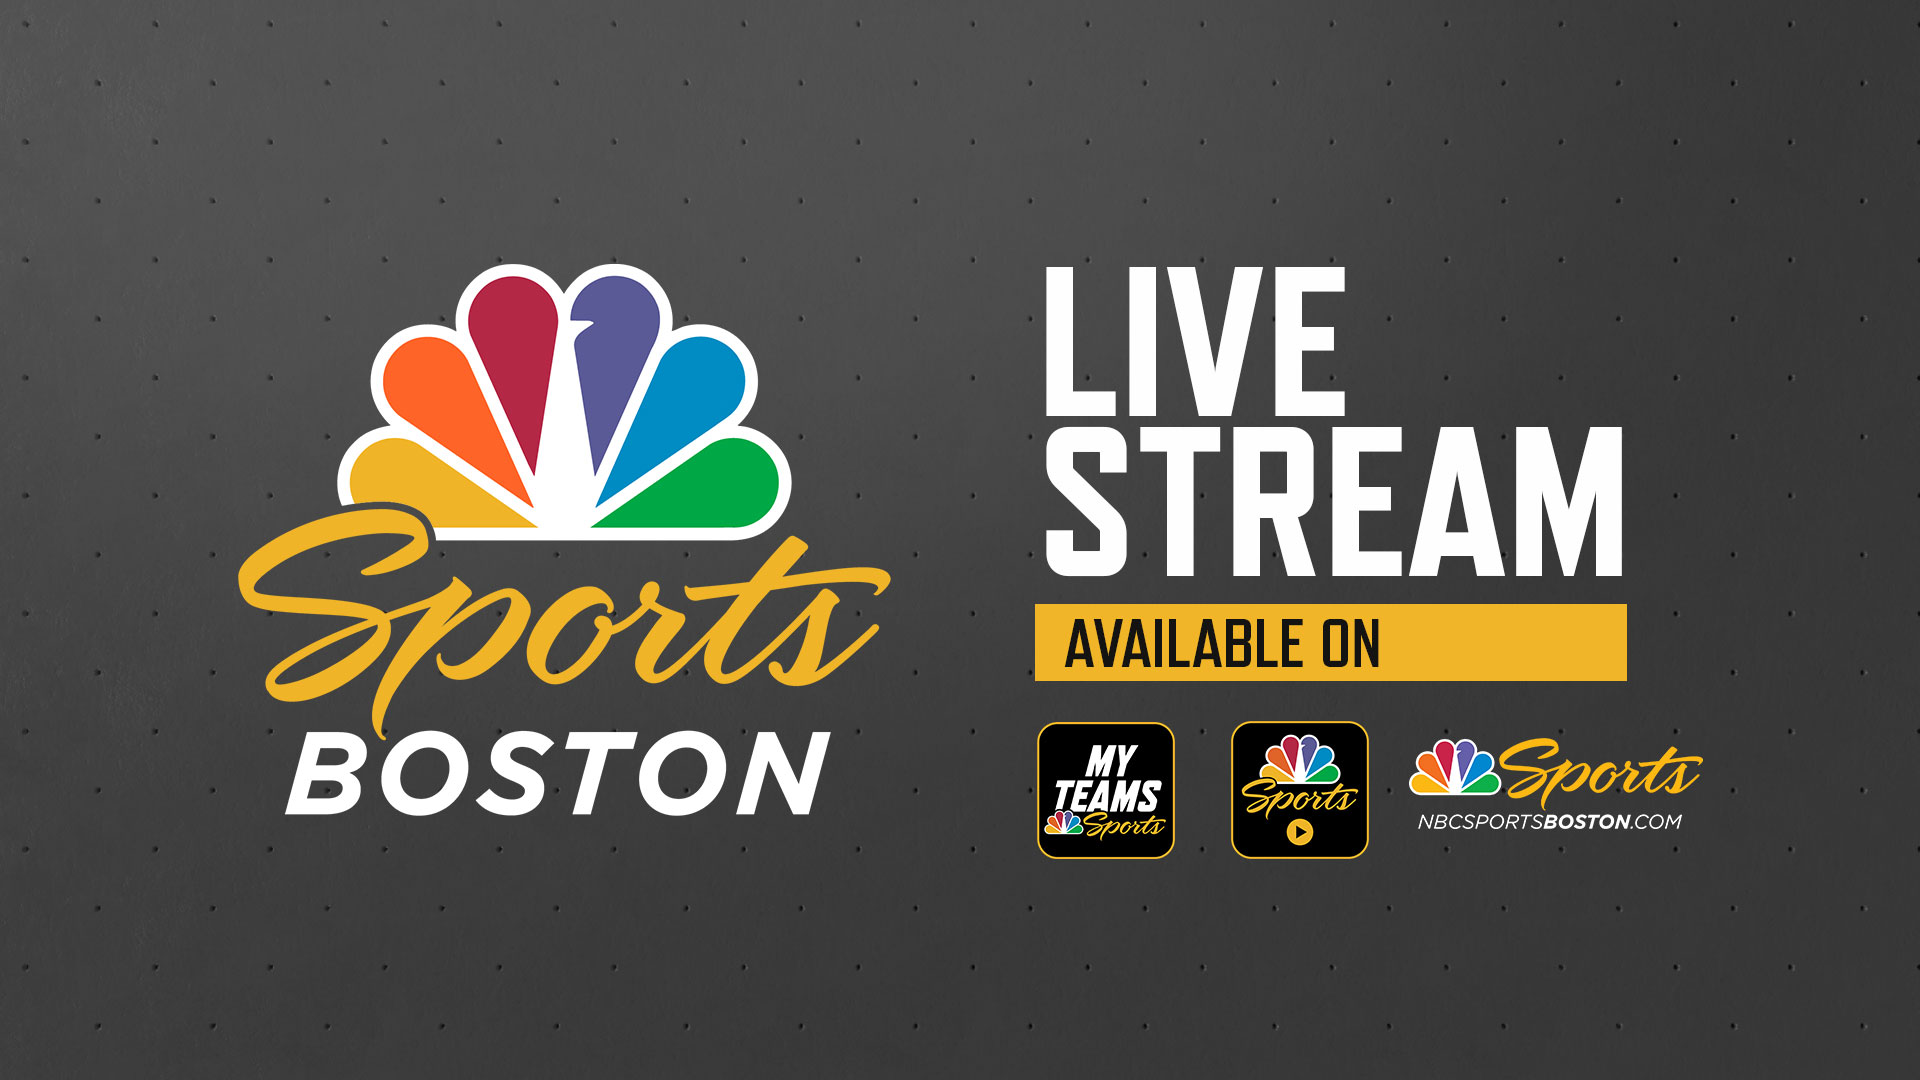 Heres How to Live NBC Sports Boston